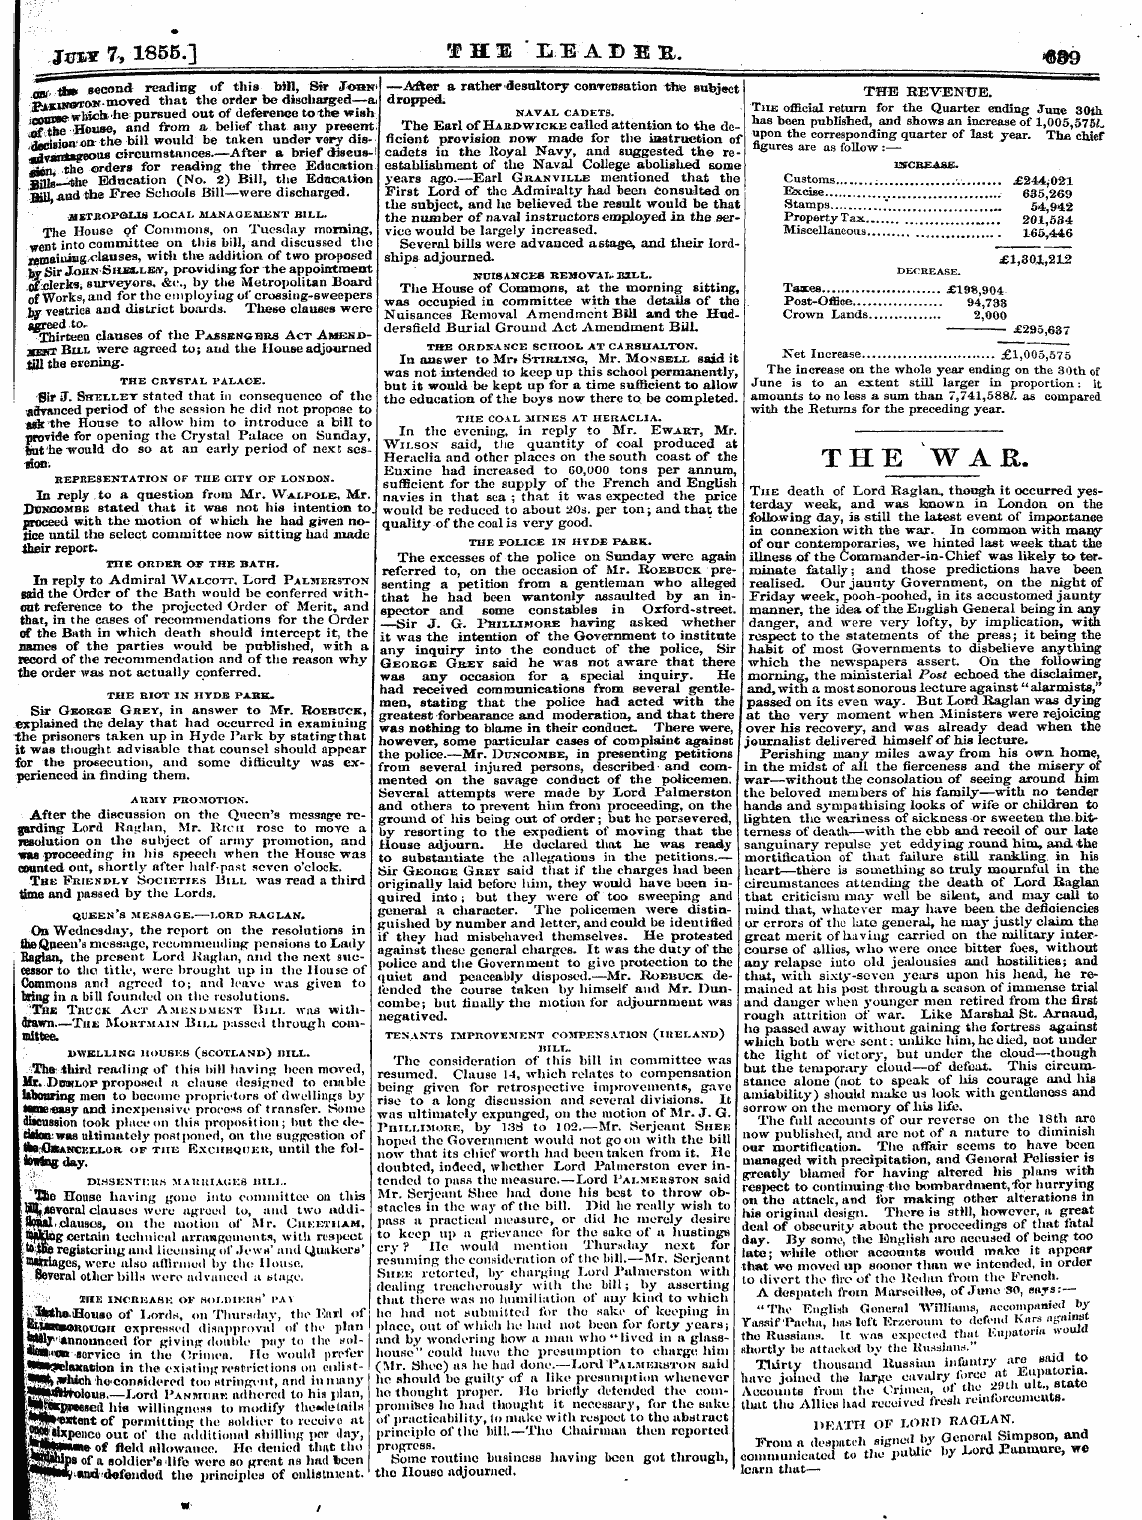 Leader (1850-1860): jS F Y, 2nd edition - Jm* 7, 1855] Fhl 3l J& A Bee, €89